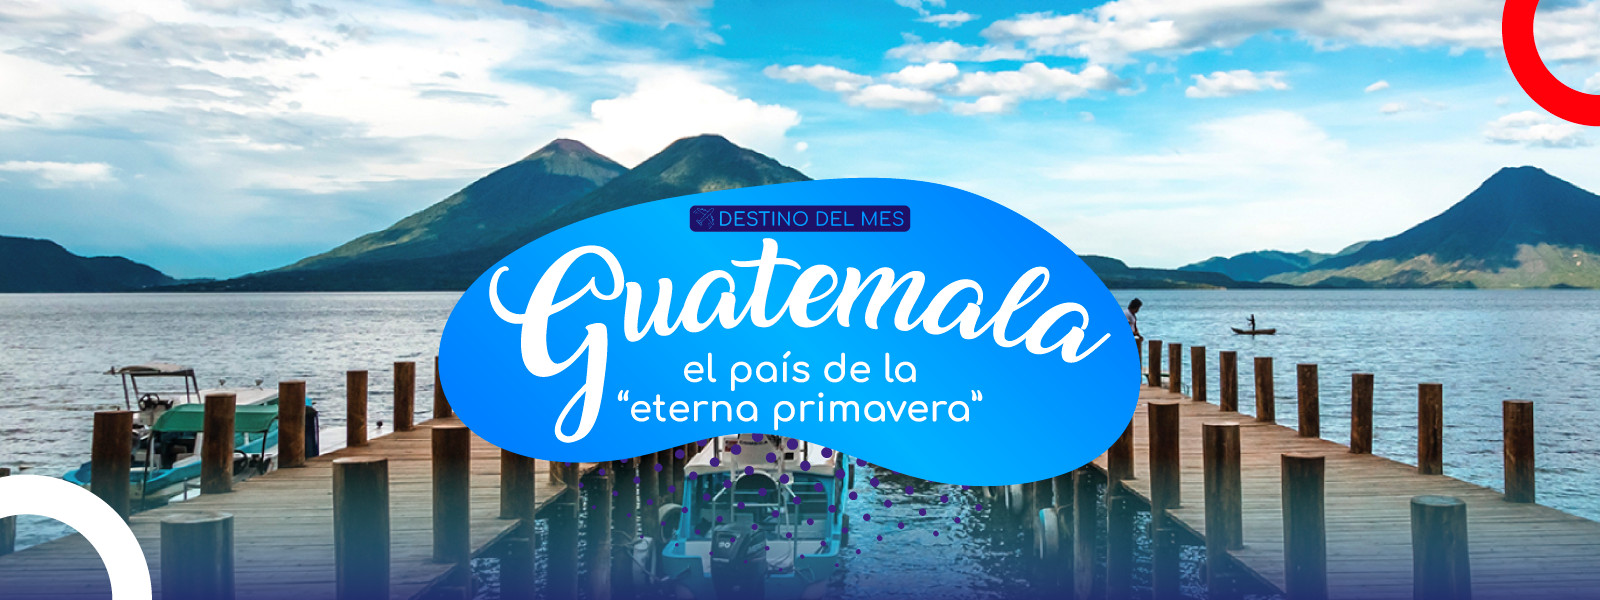 Guatemala El país de la eterna primavera